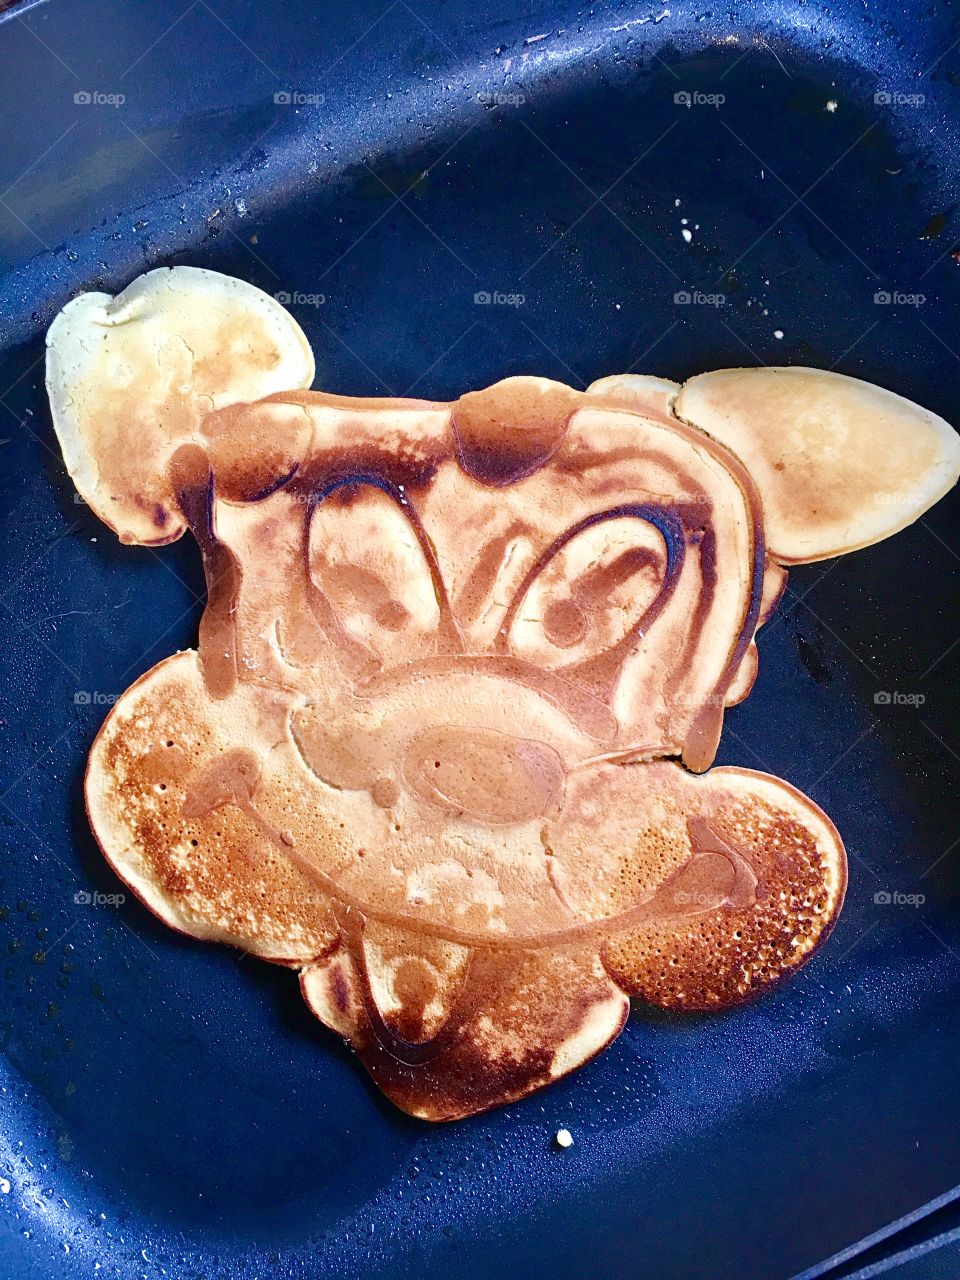 Mickey Mouse pancake 